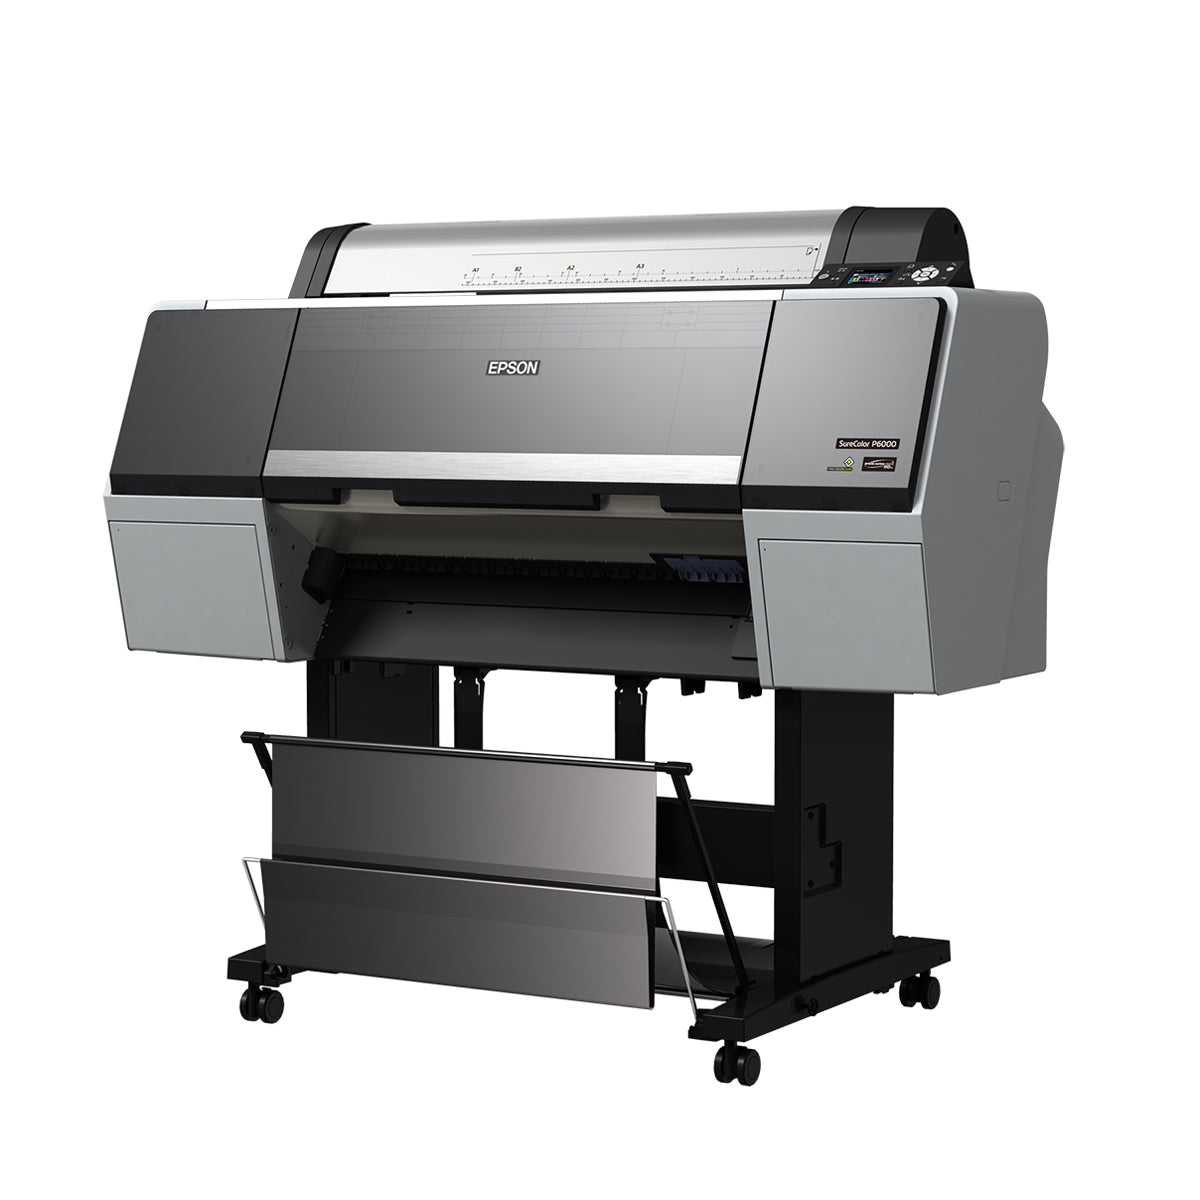 Epson SureColor P6000 Printer Standard Edition